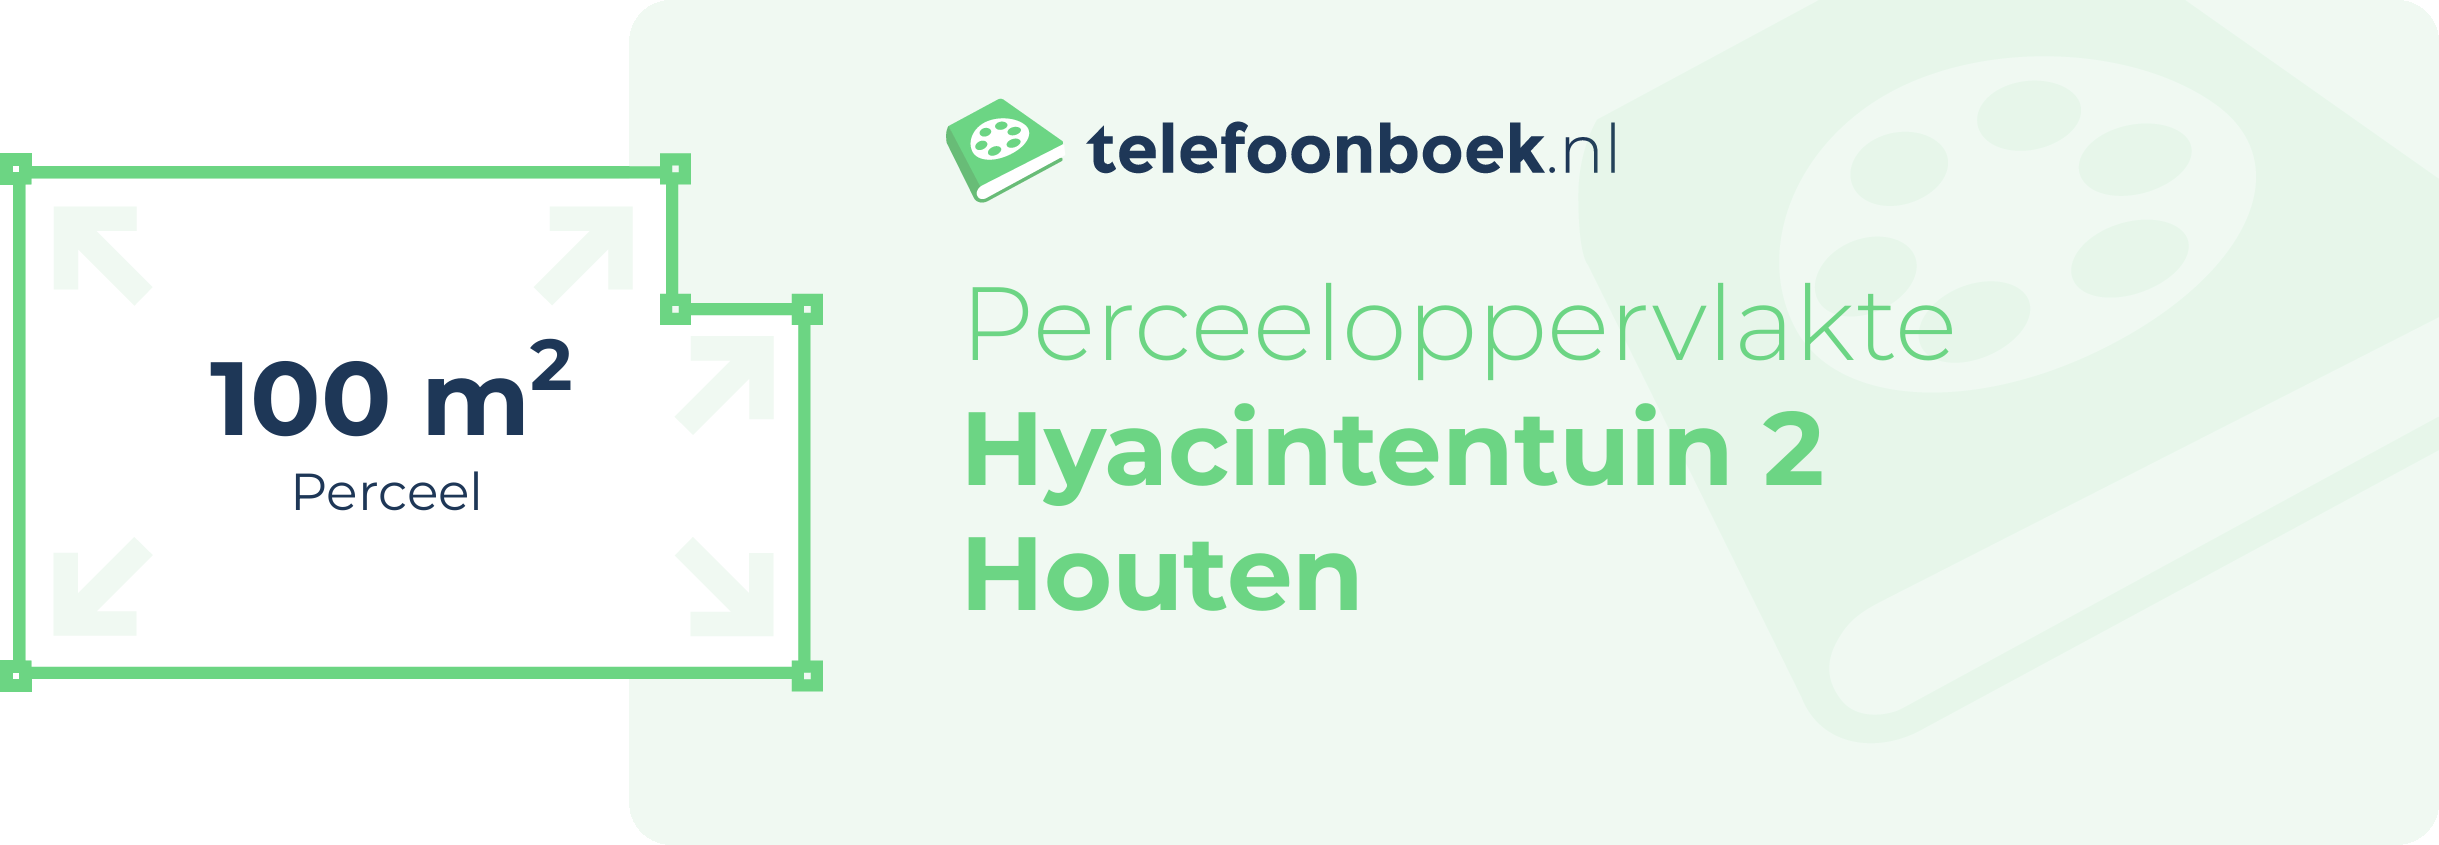 Perceeloppervlakte Hyacintentuin 2 Houten